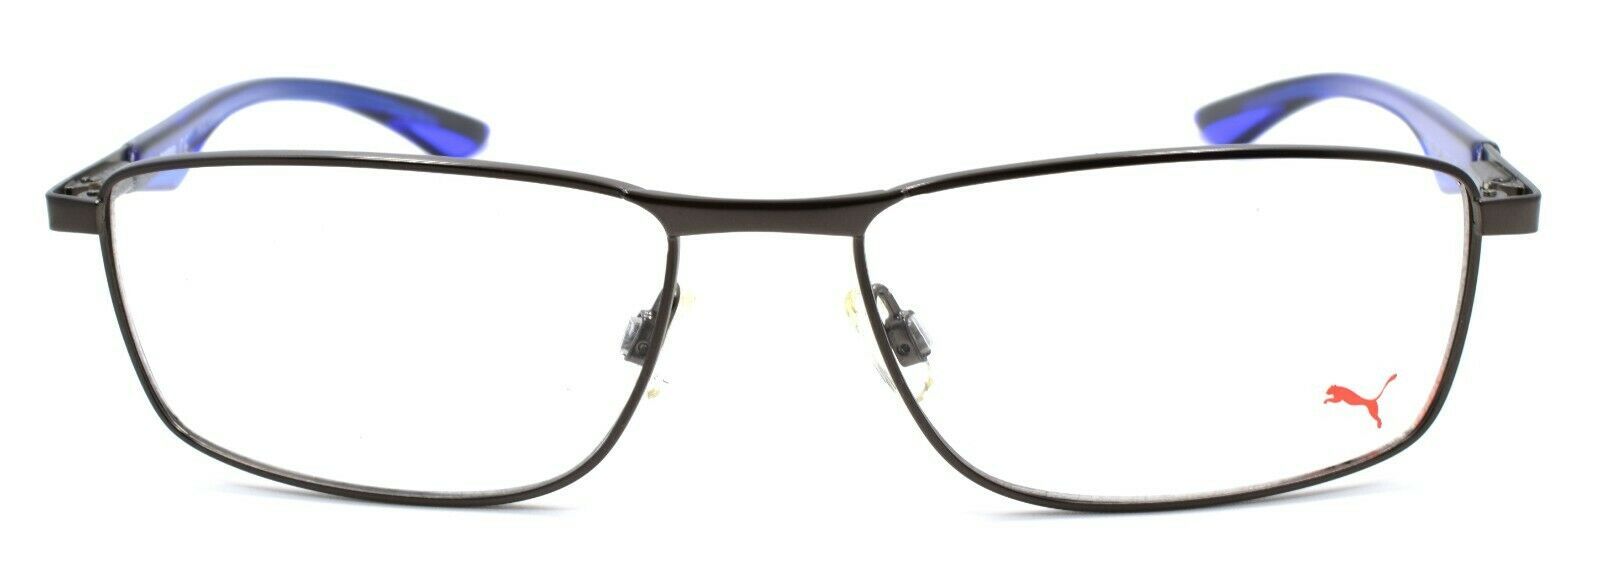 2-PUMA PU0065O 004 Men's Eyeglasses Frames 54-16-140 Ruthenium / Blue-889652028262-IKSpecs